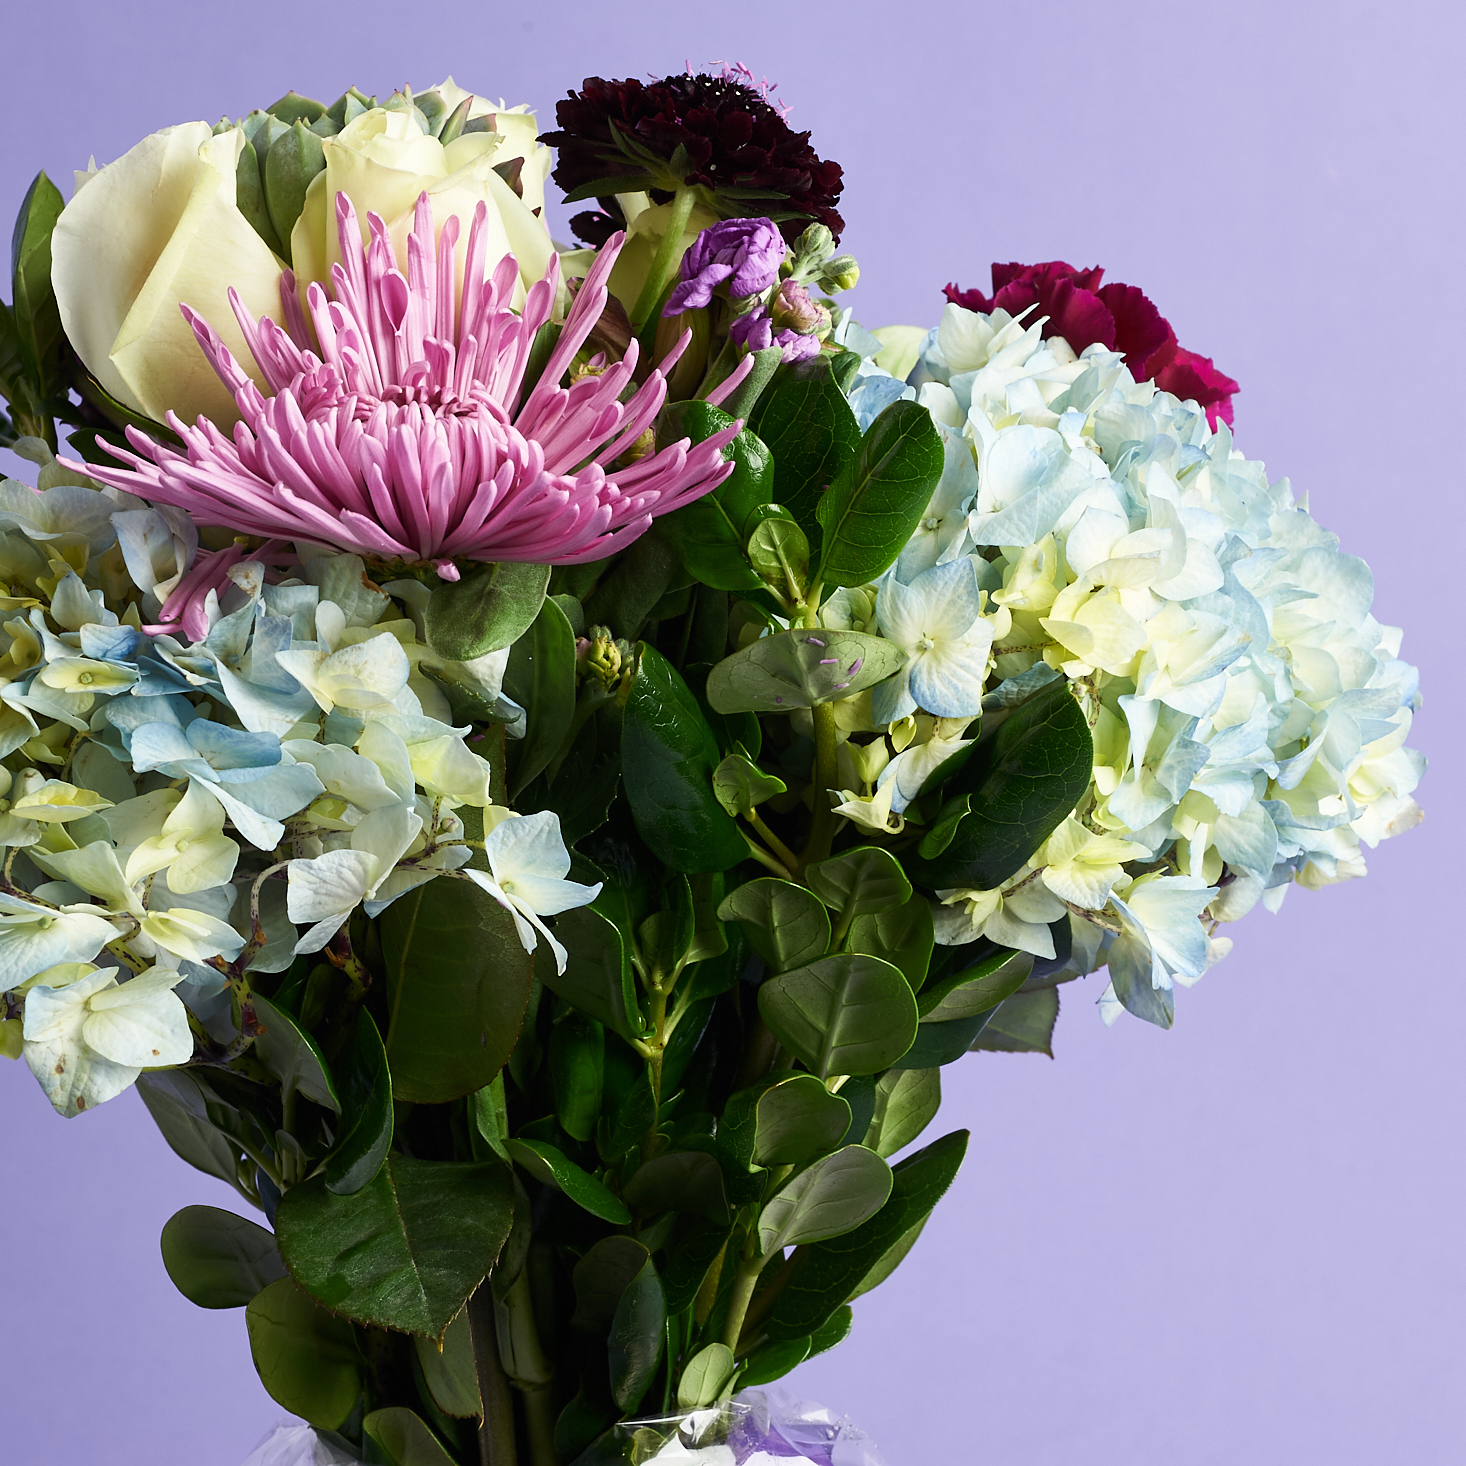 Enjoy Flowers close-up of bouquet